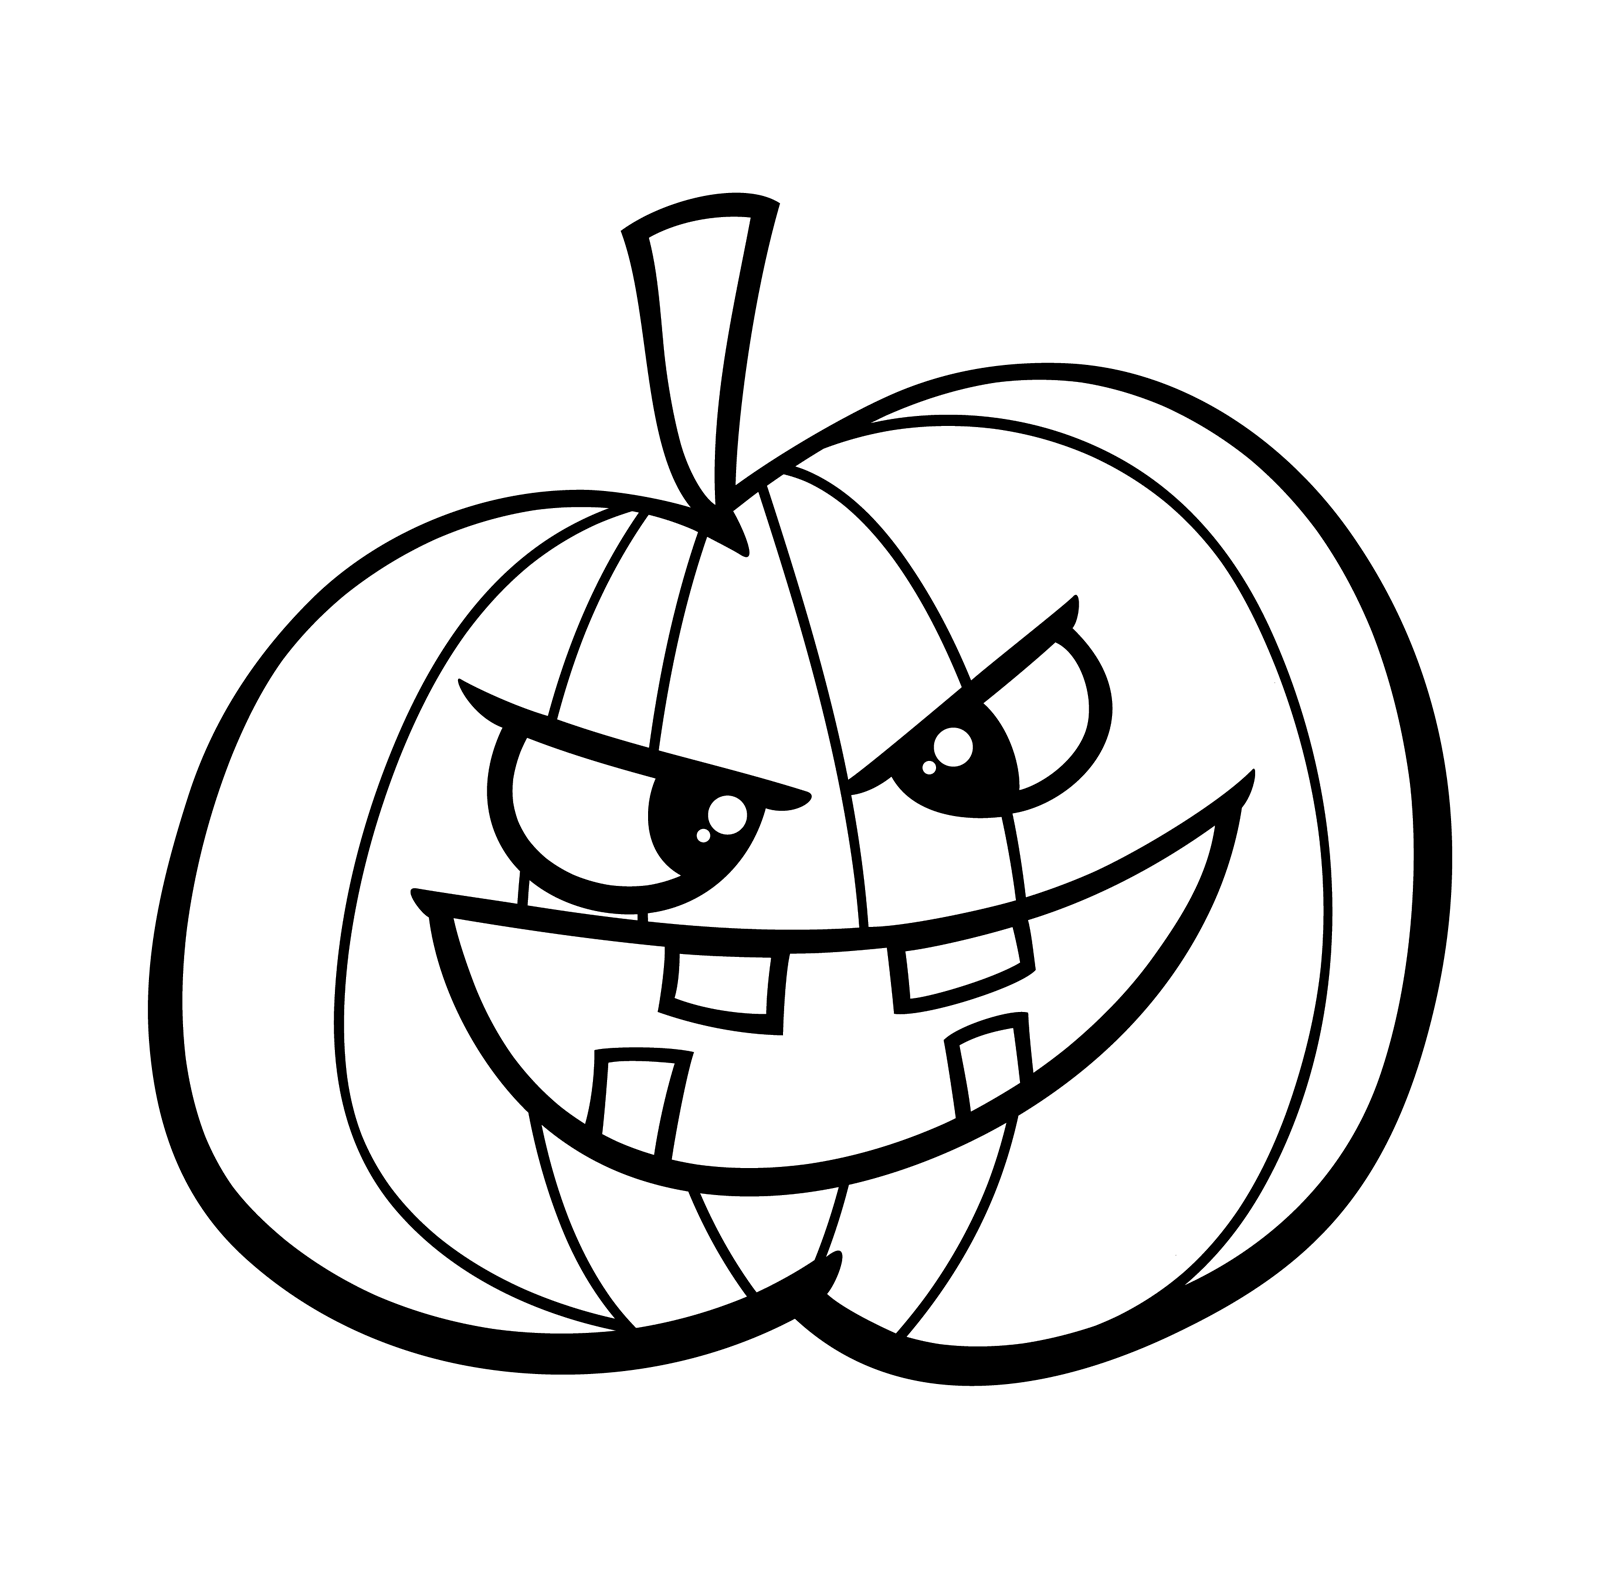 Halloween - Una zucca di Halloween con lo sguardo mlto arrabbiato